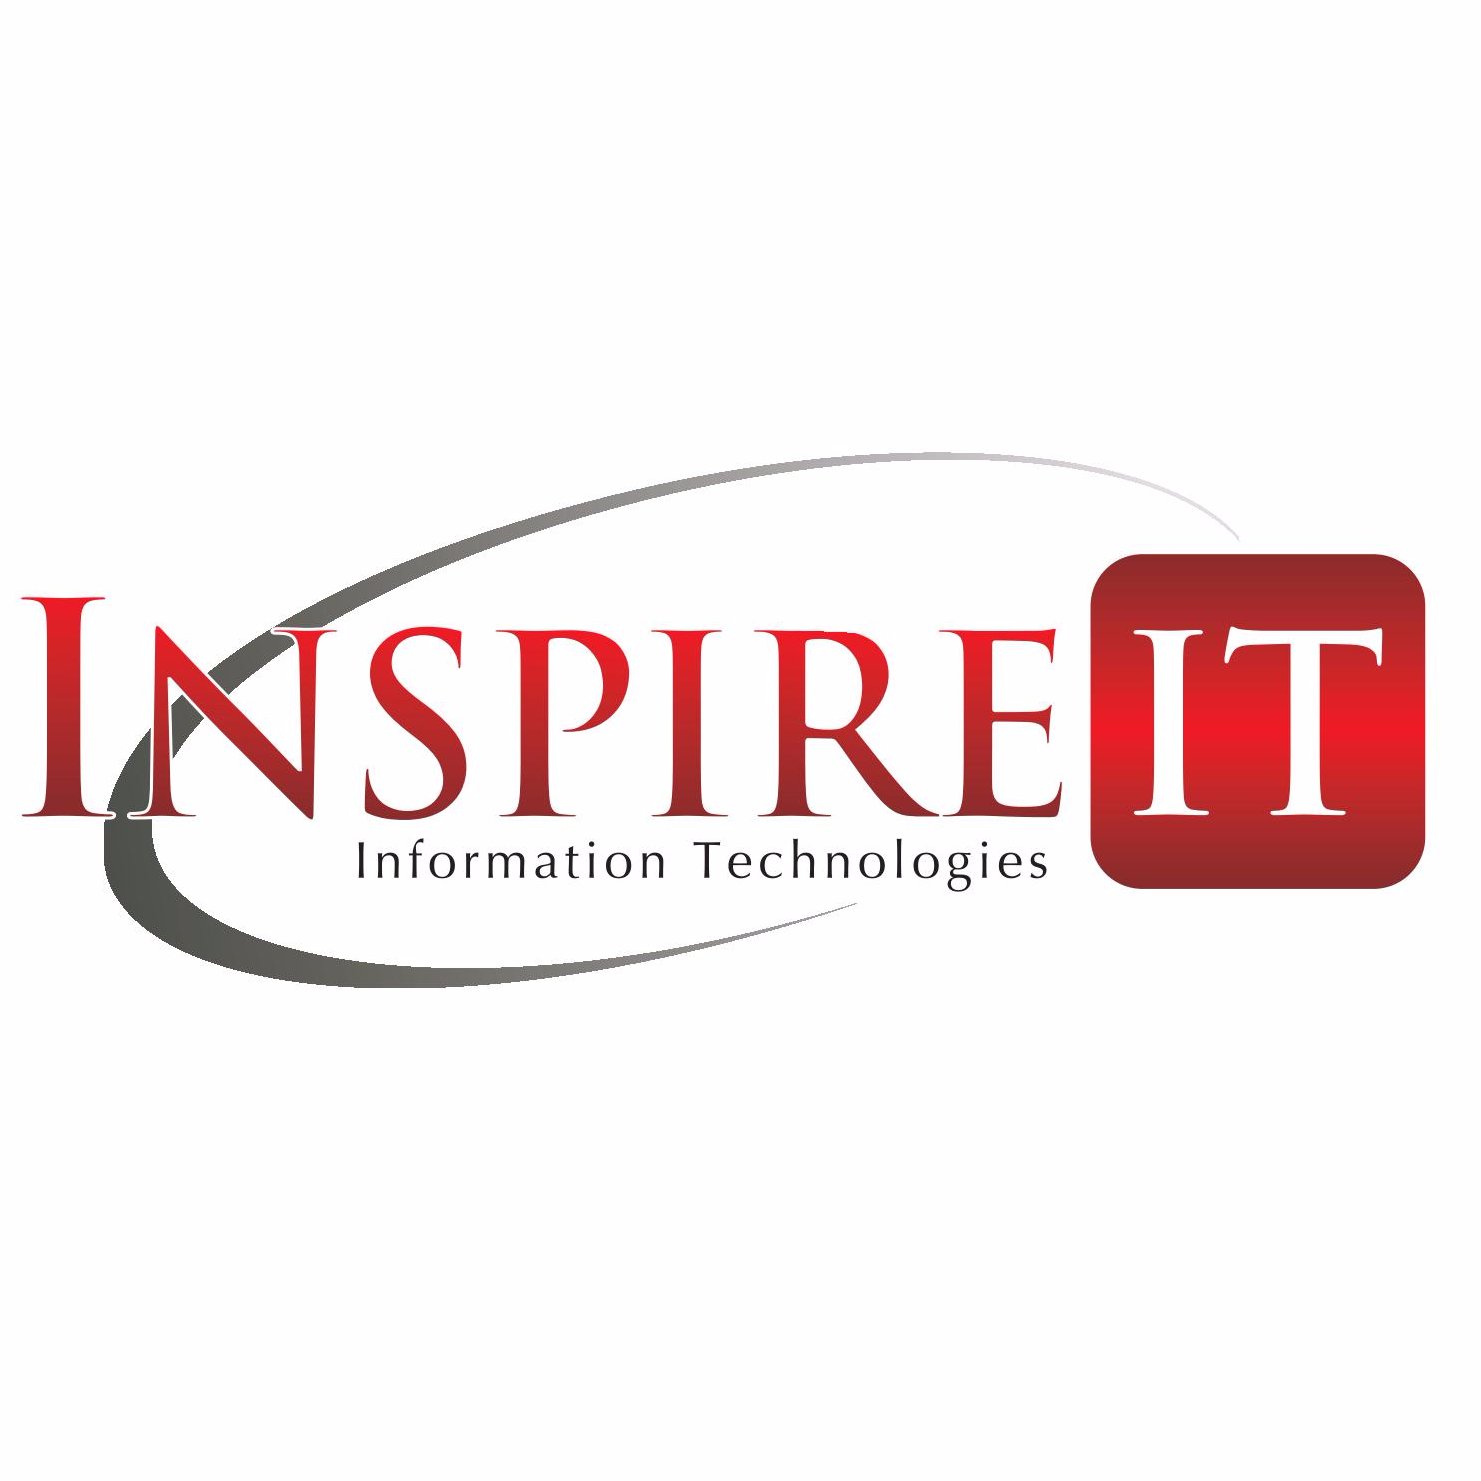 InspireIT Information Technologies